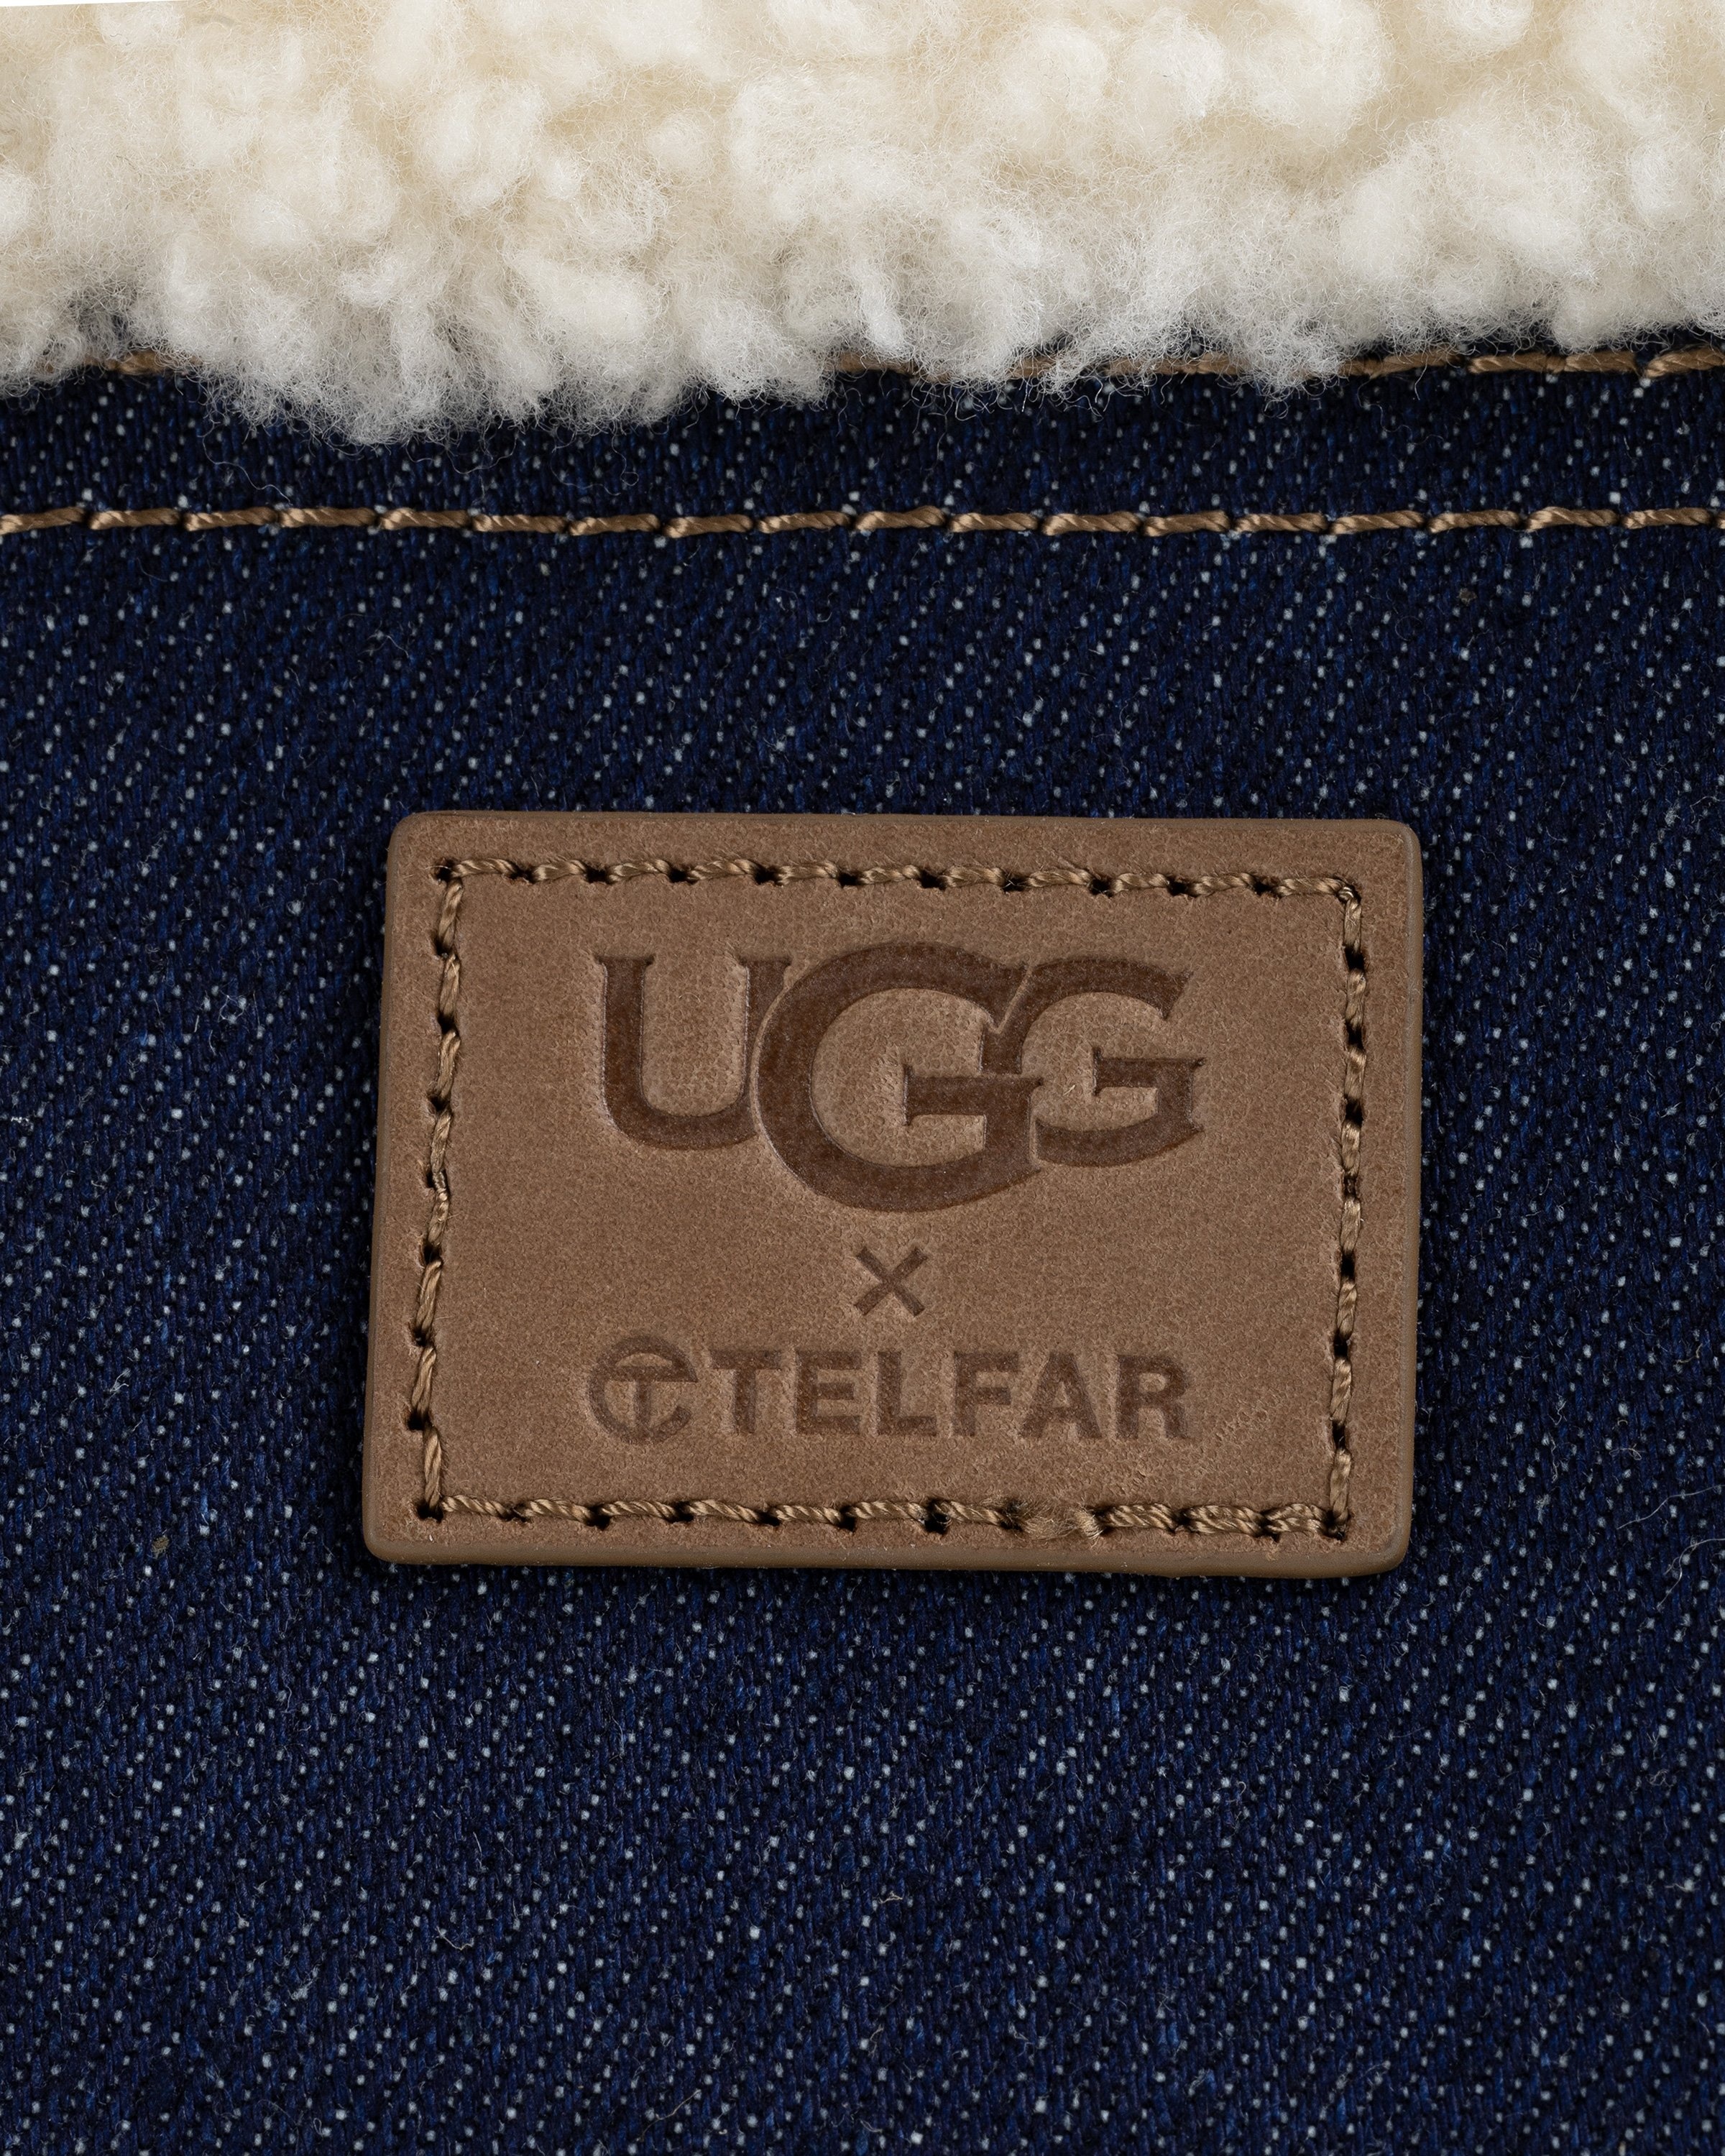 New UGG x TELFAR Denim Collection - THE JEANS BLOG